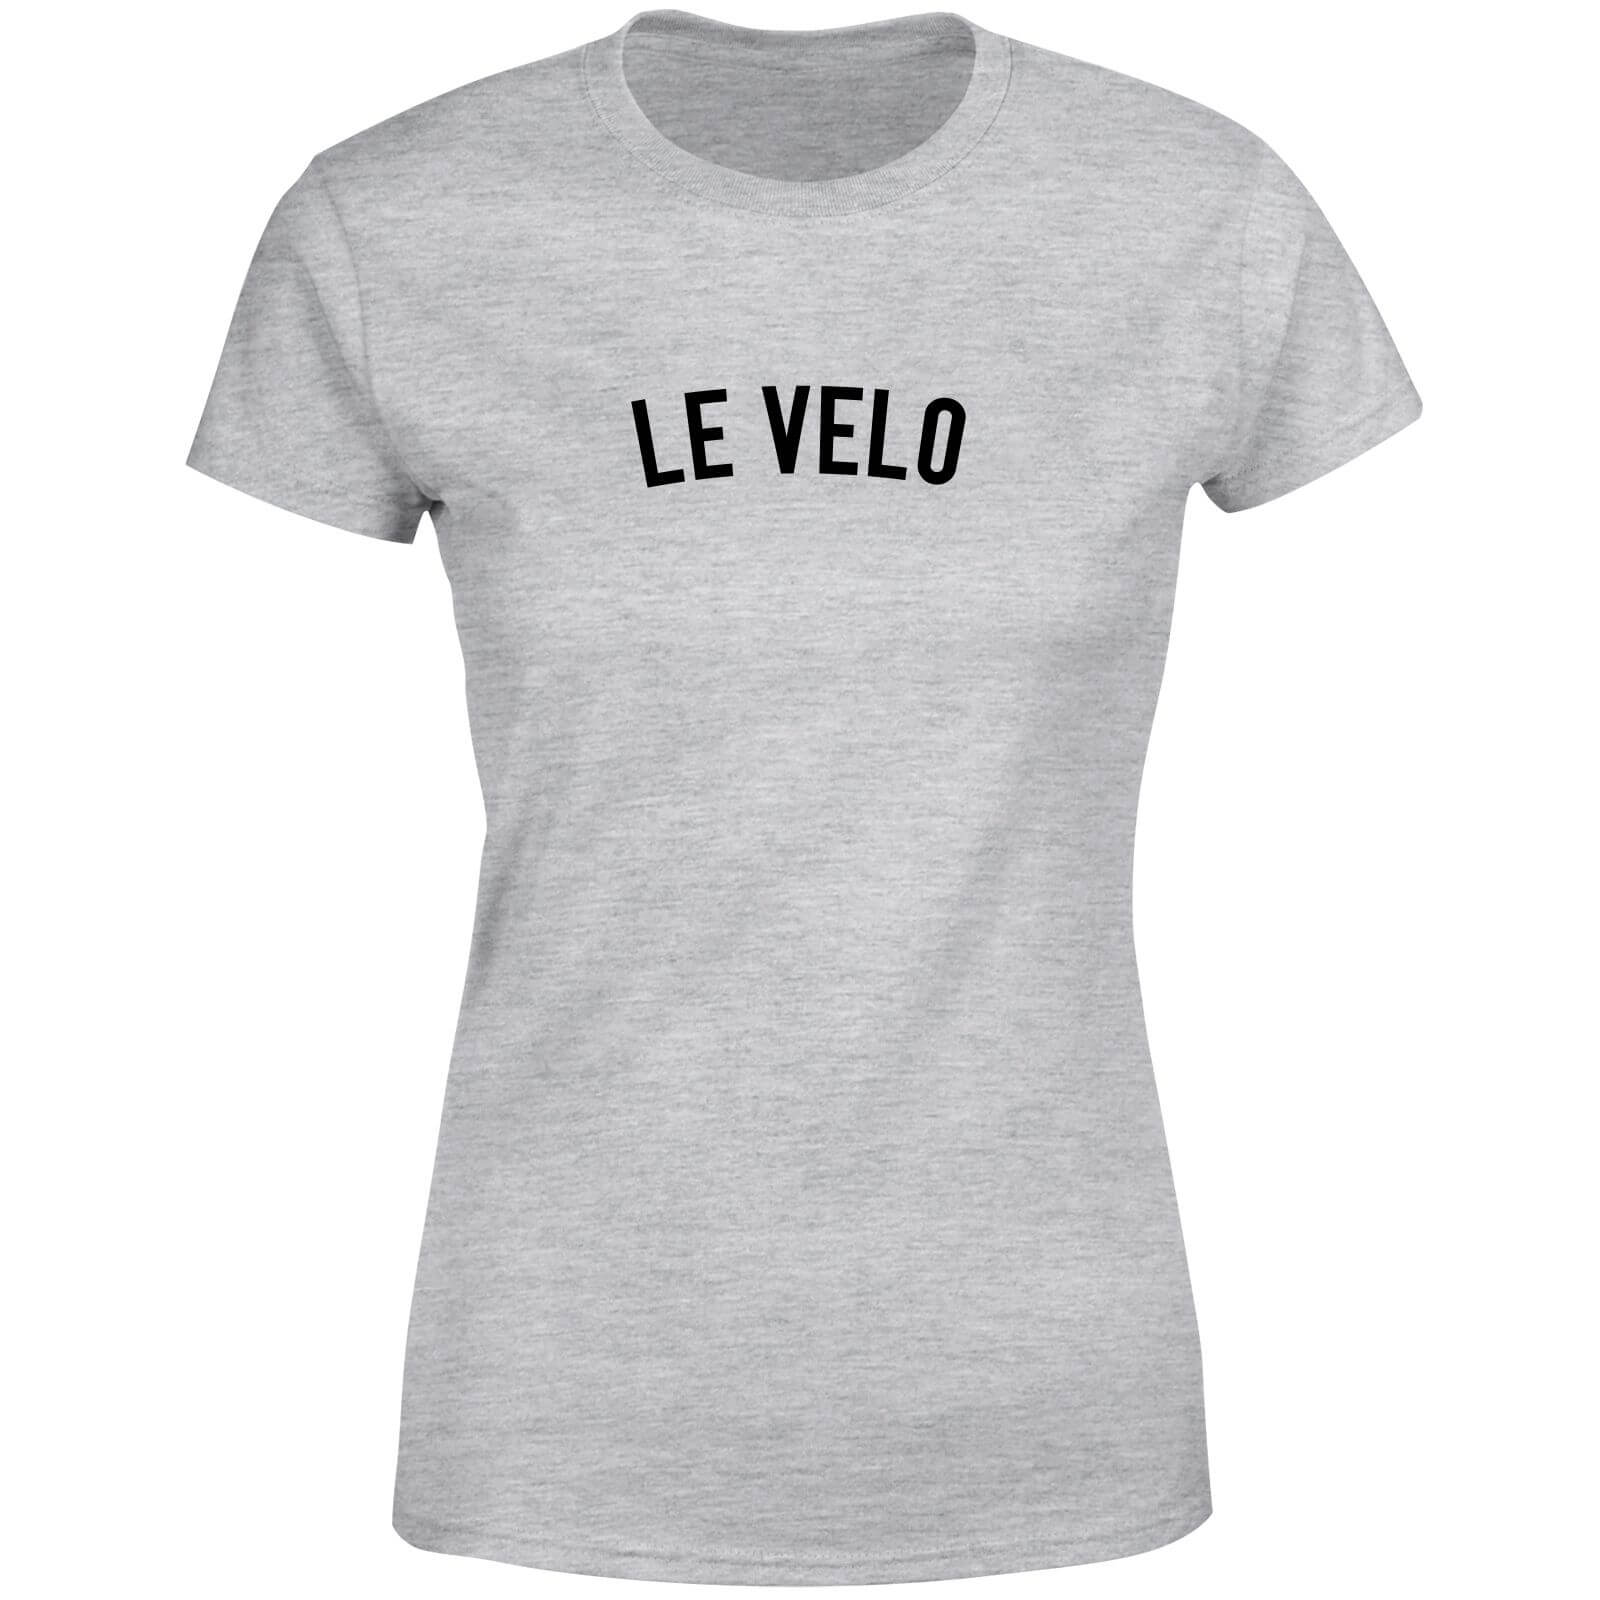 Le Velo Women's T-Shirt - Grey - 5XL - Grey